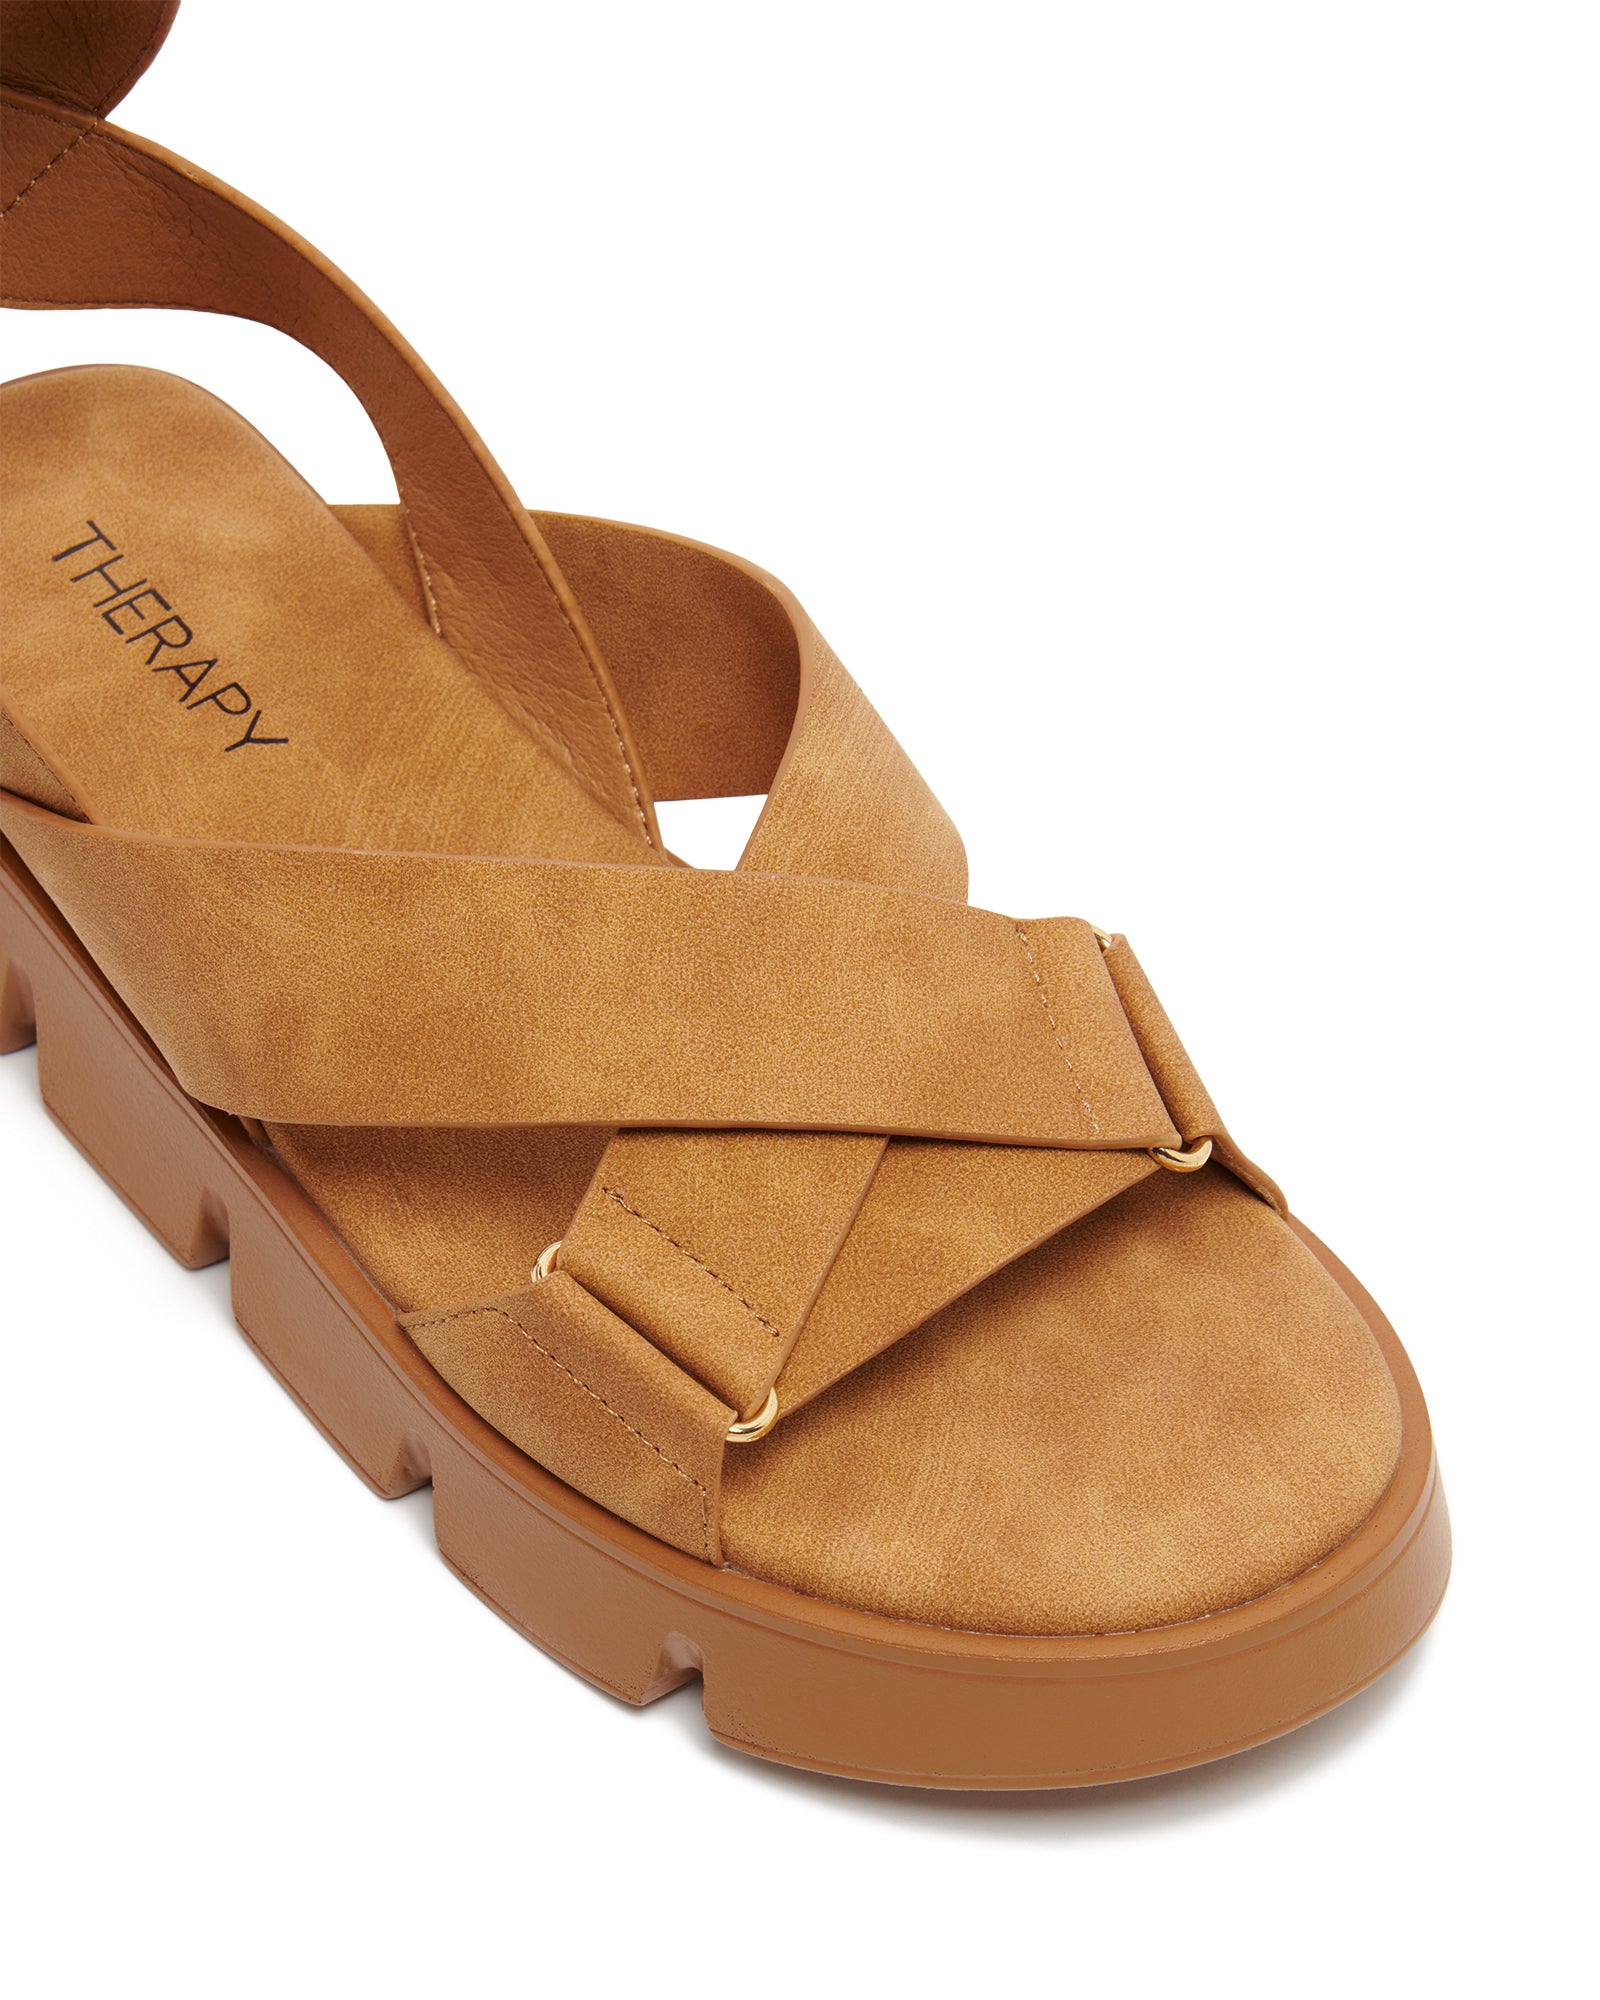 Therapy Shoes Maze Caramel Nubuck | Women's Sandals | Chunky | Flatform